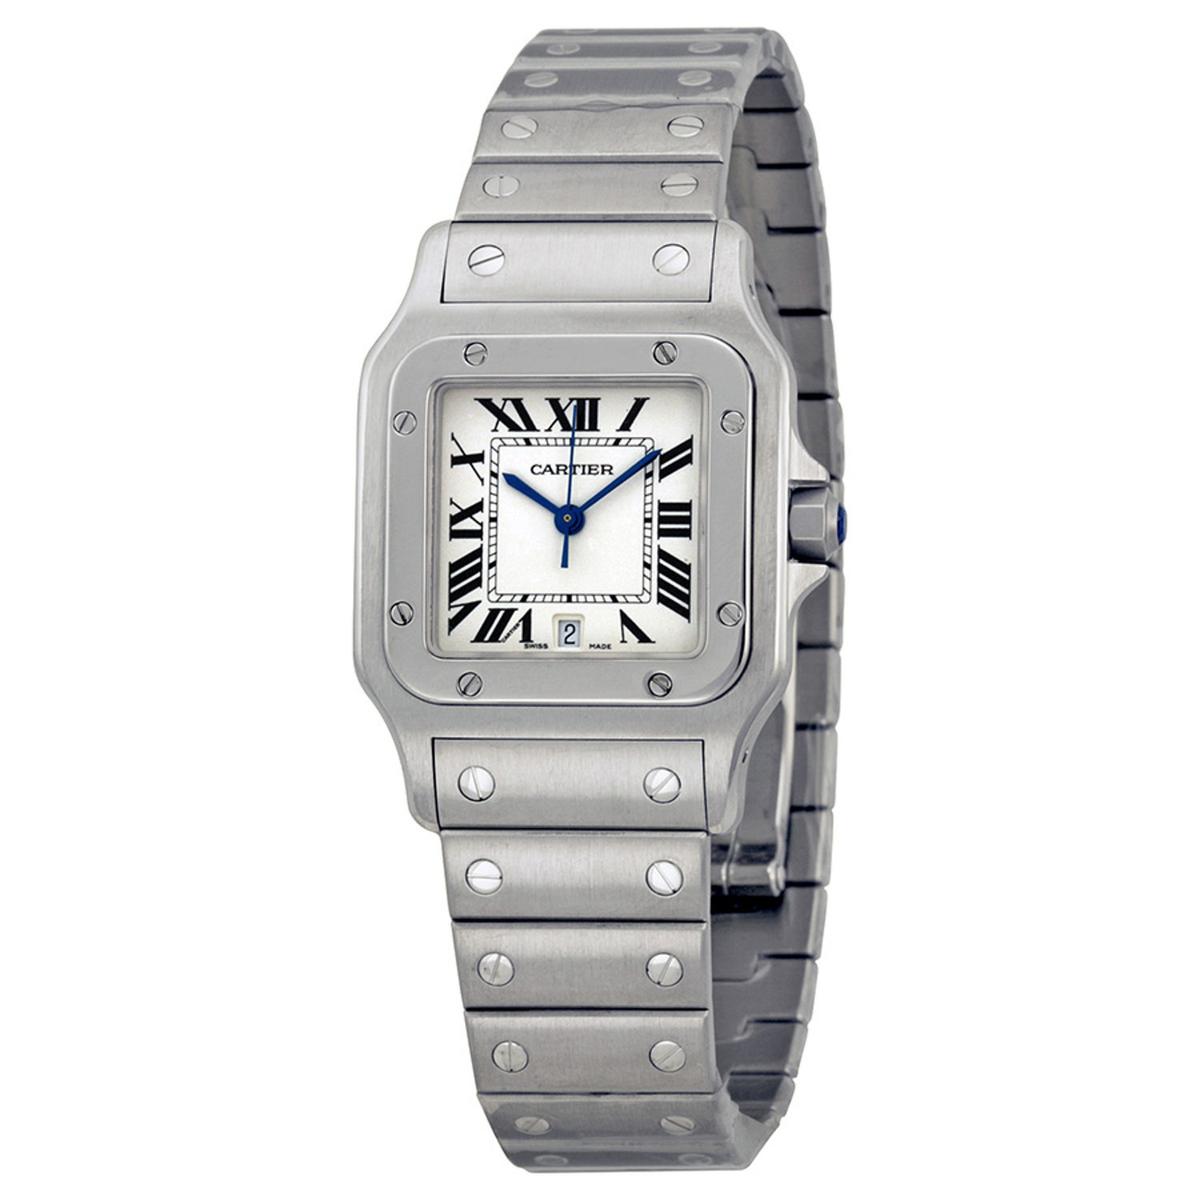 *Cartier Men's Santos Stainless Steel Case, Swiss Quartz Movement, Scratch-Resistant Watch